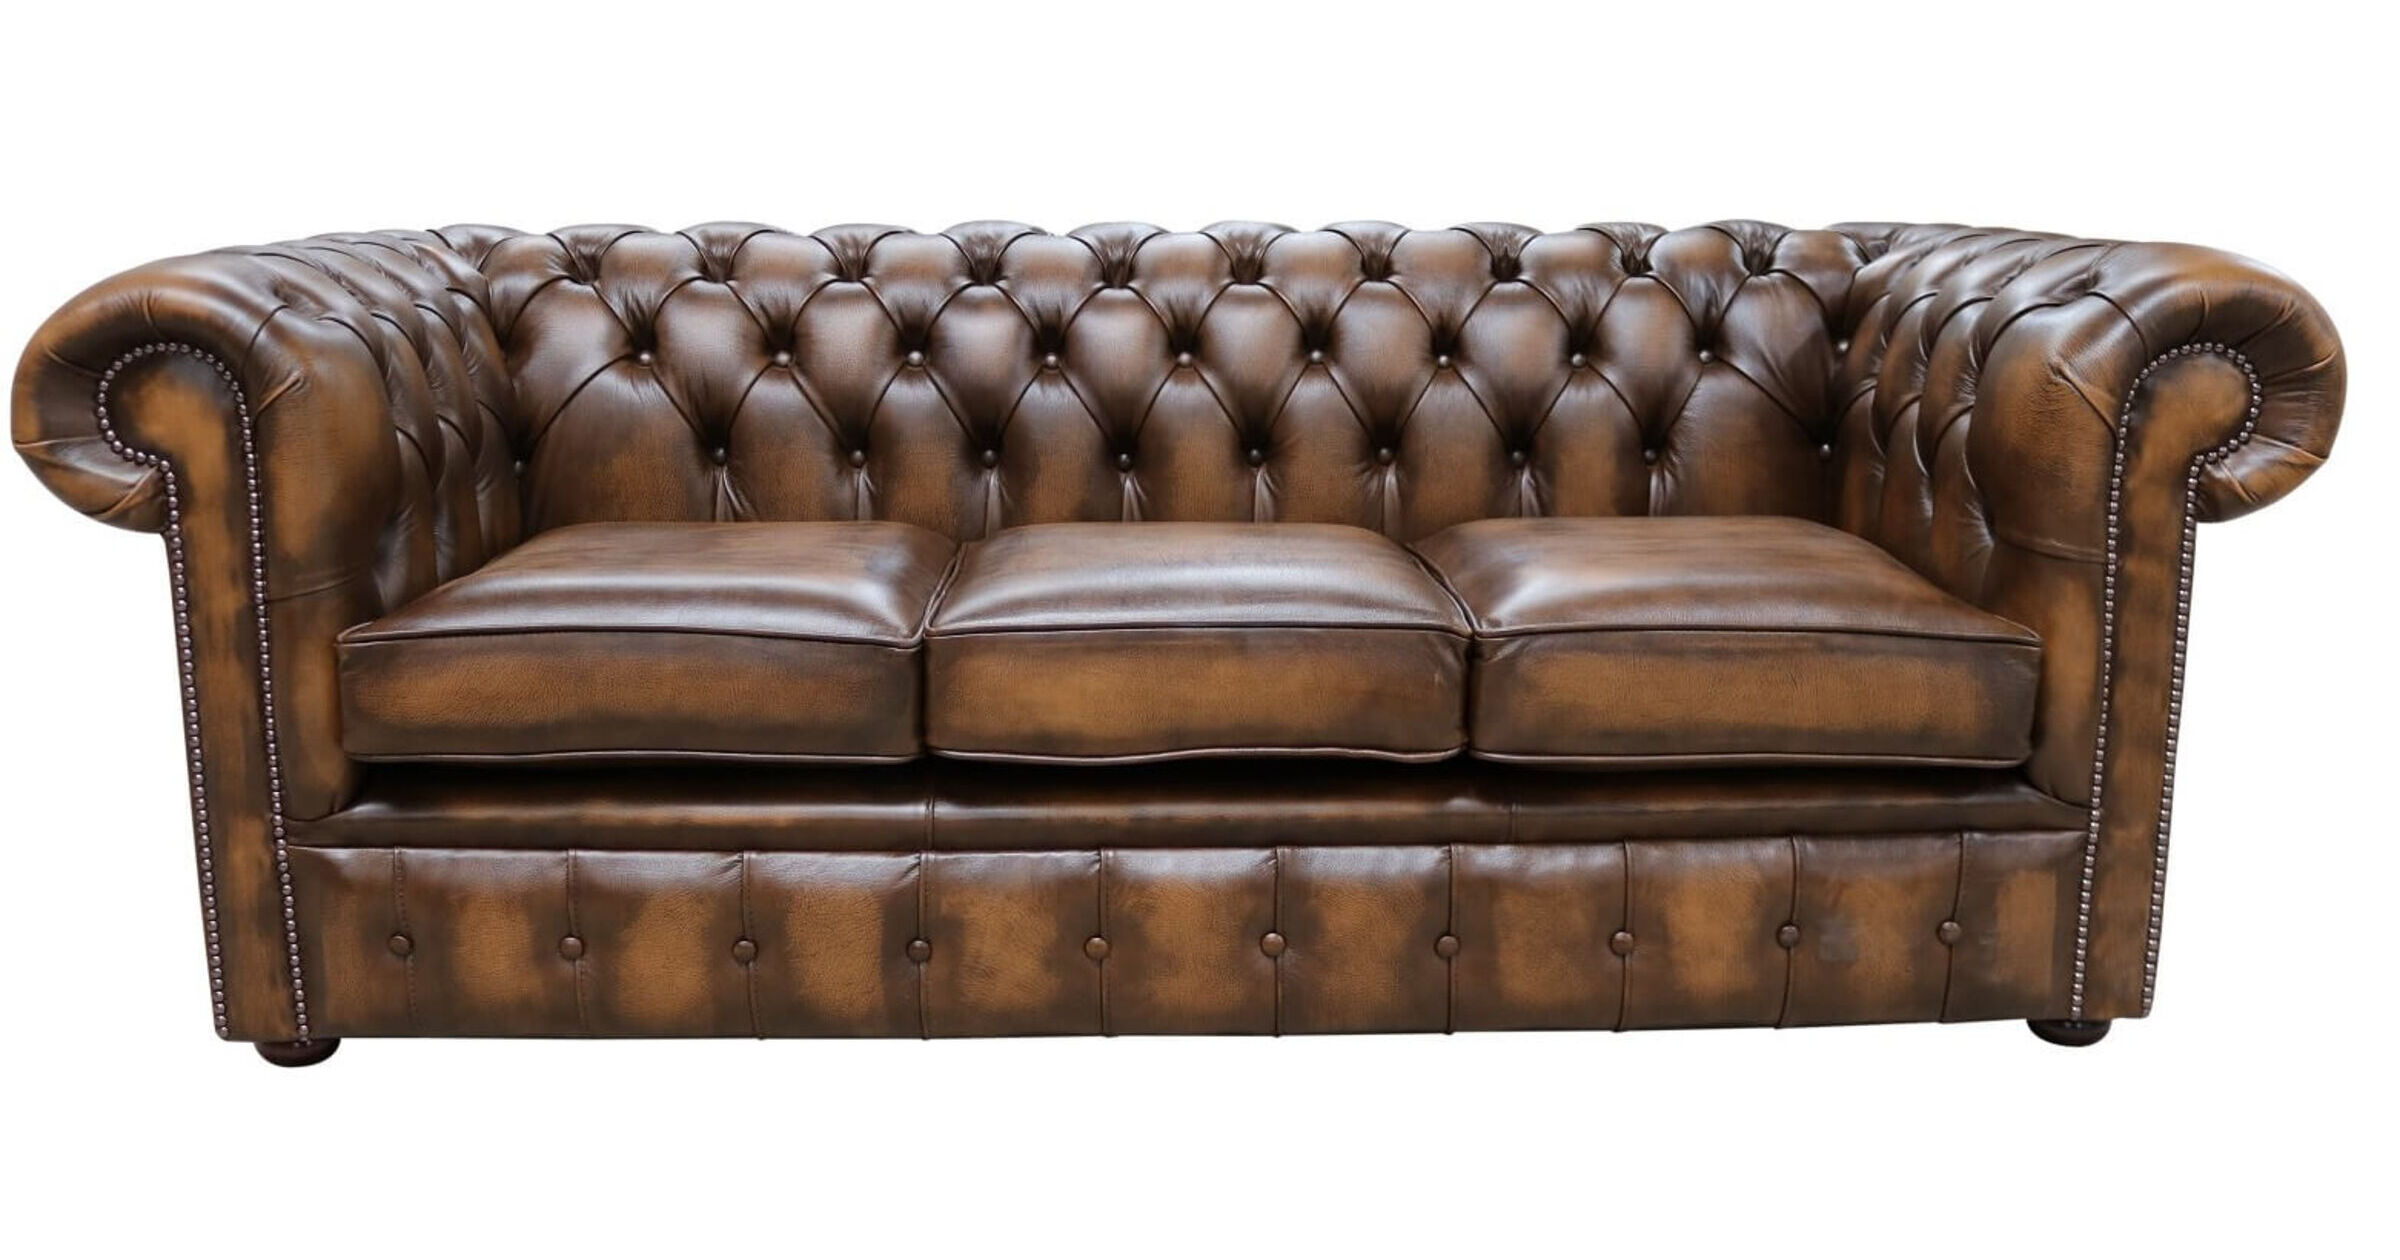 DesignerSofas4U | Antique Tan leather Chesterfield Sofa